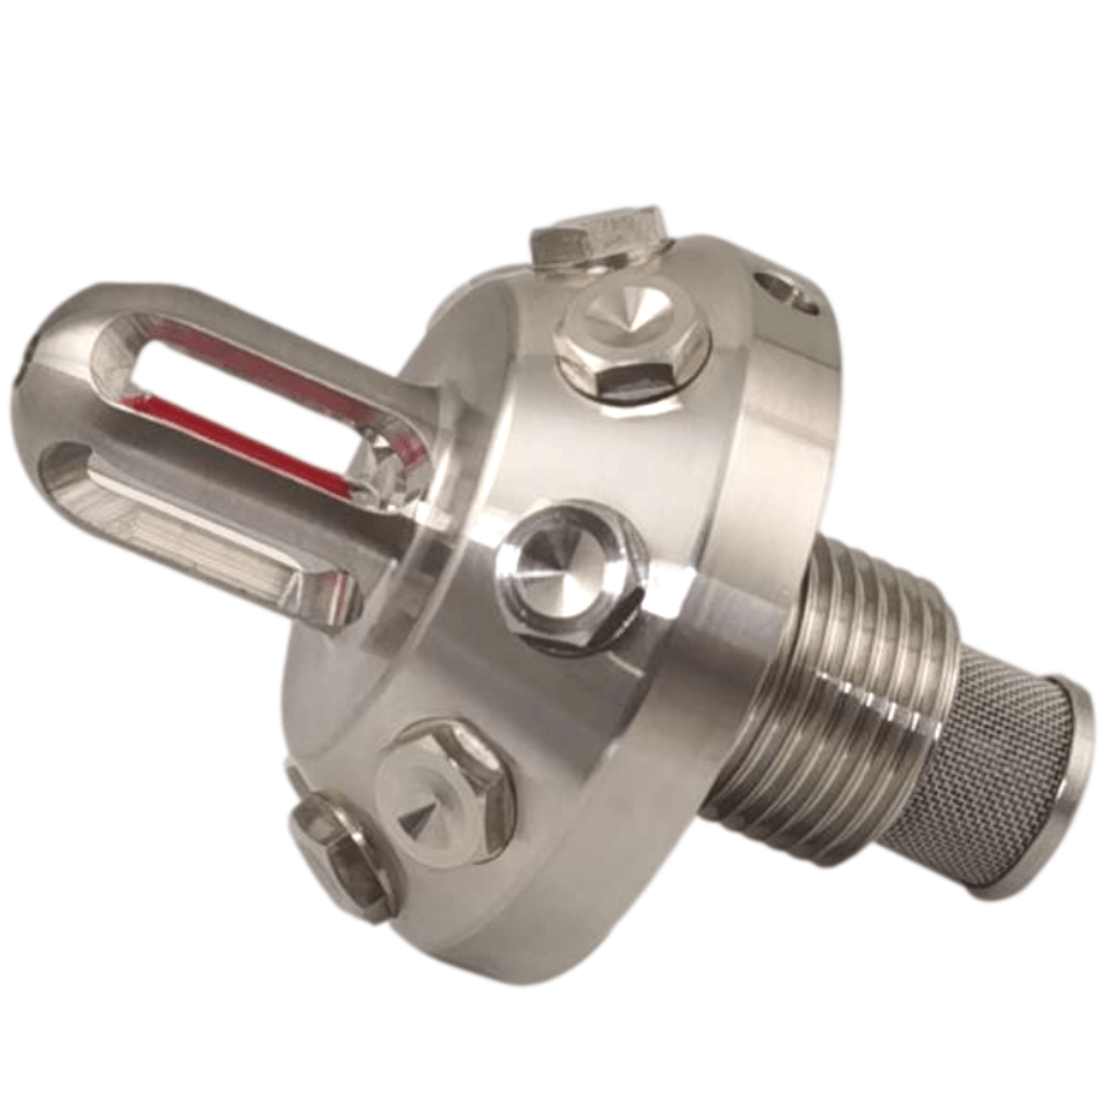 Customize JOB UL Listed Glass Bulbs Heat Sensititve Water Mist Nozzles Fire Suppression System